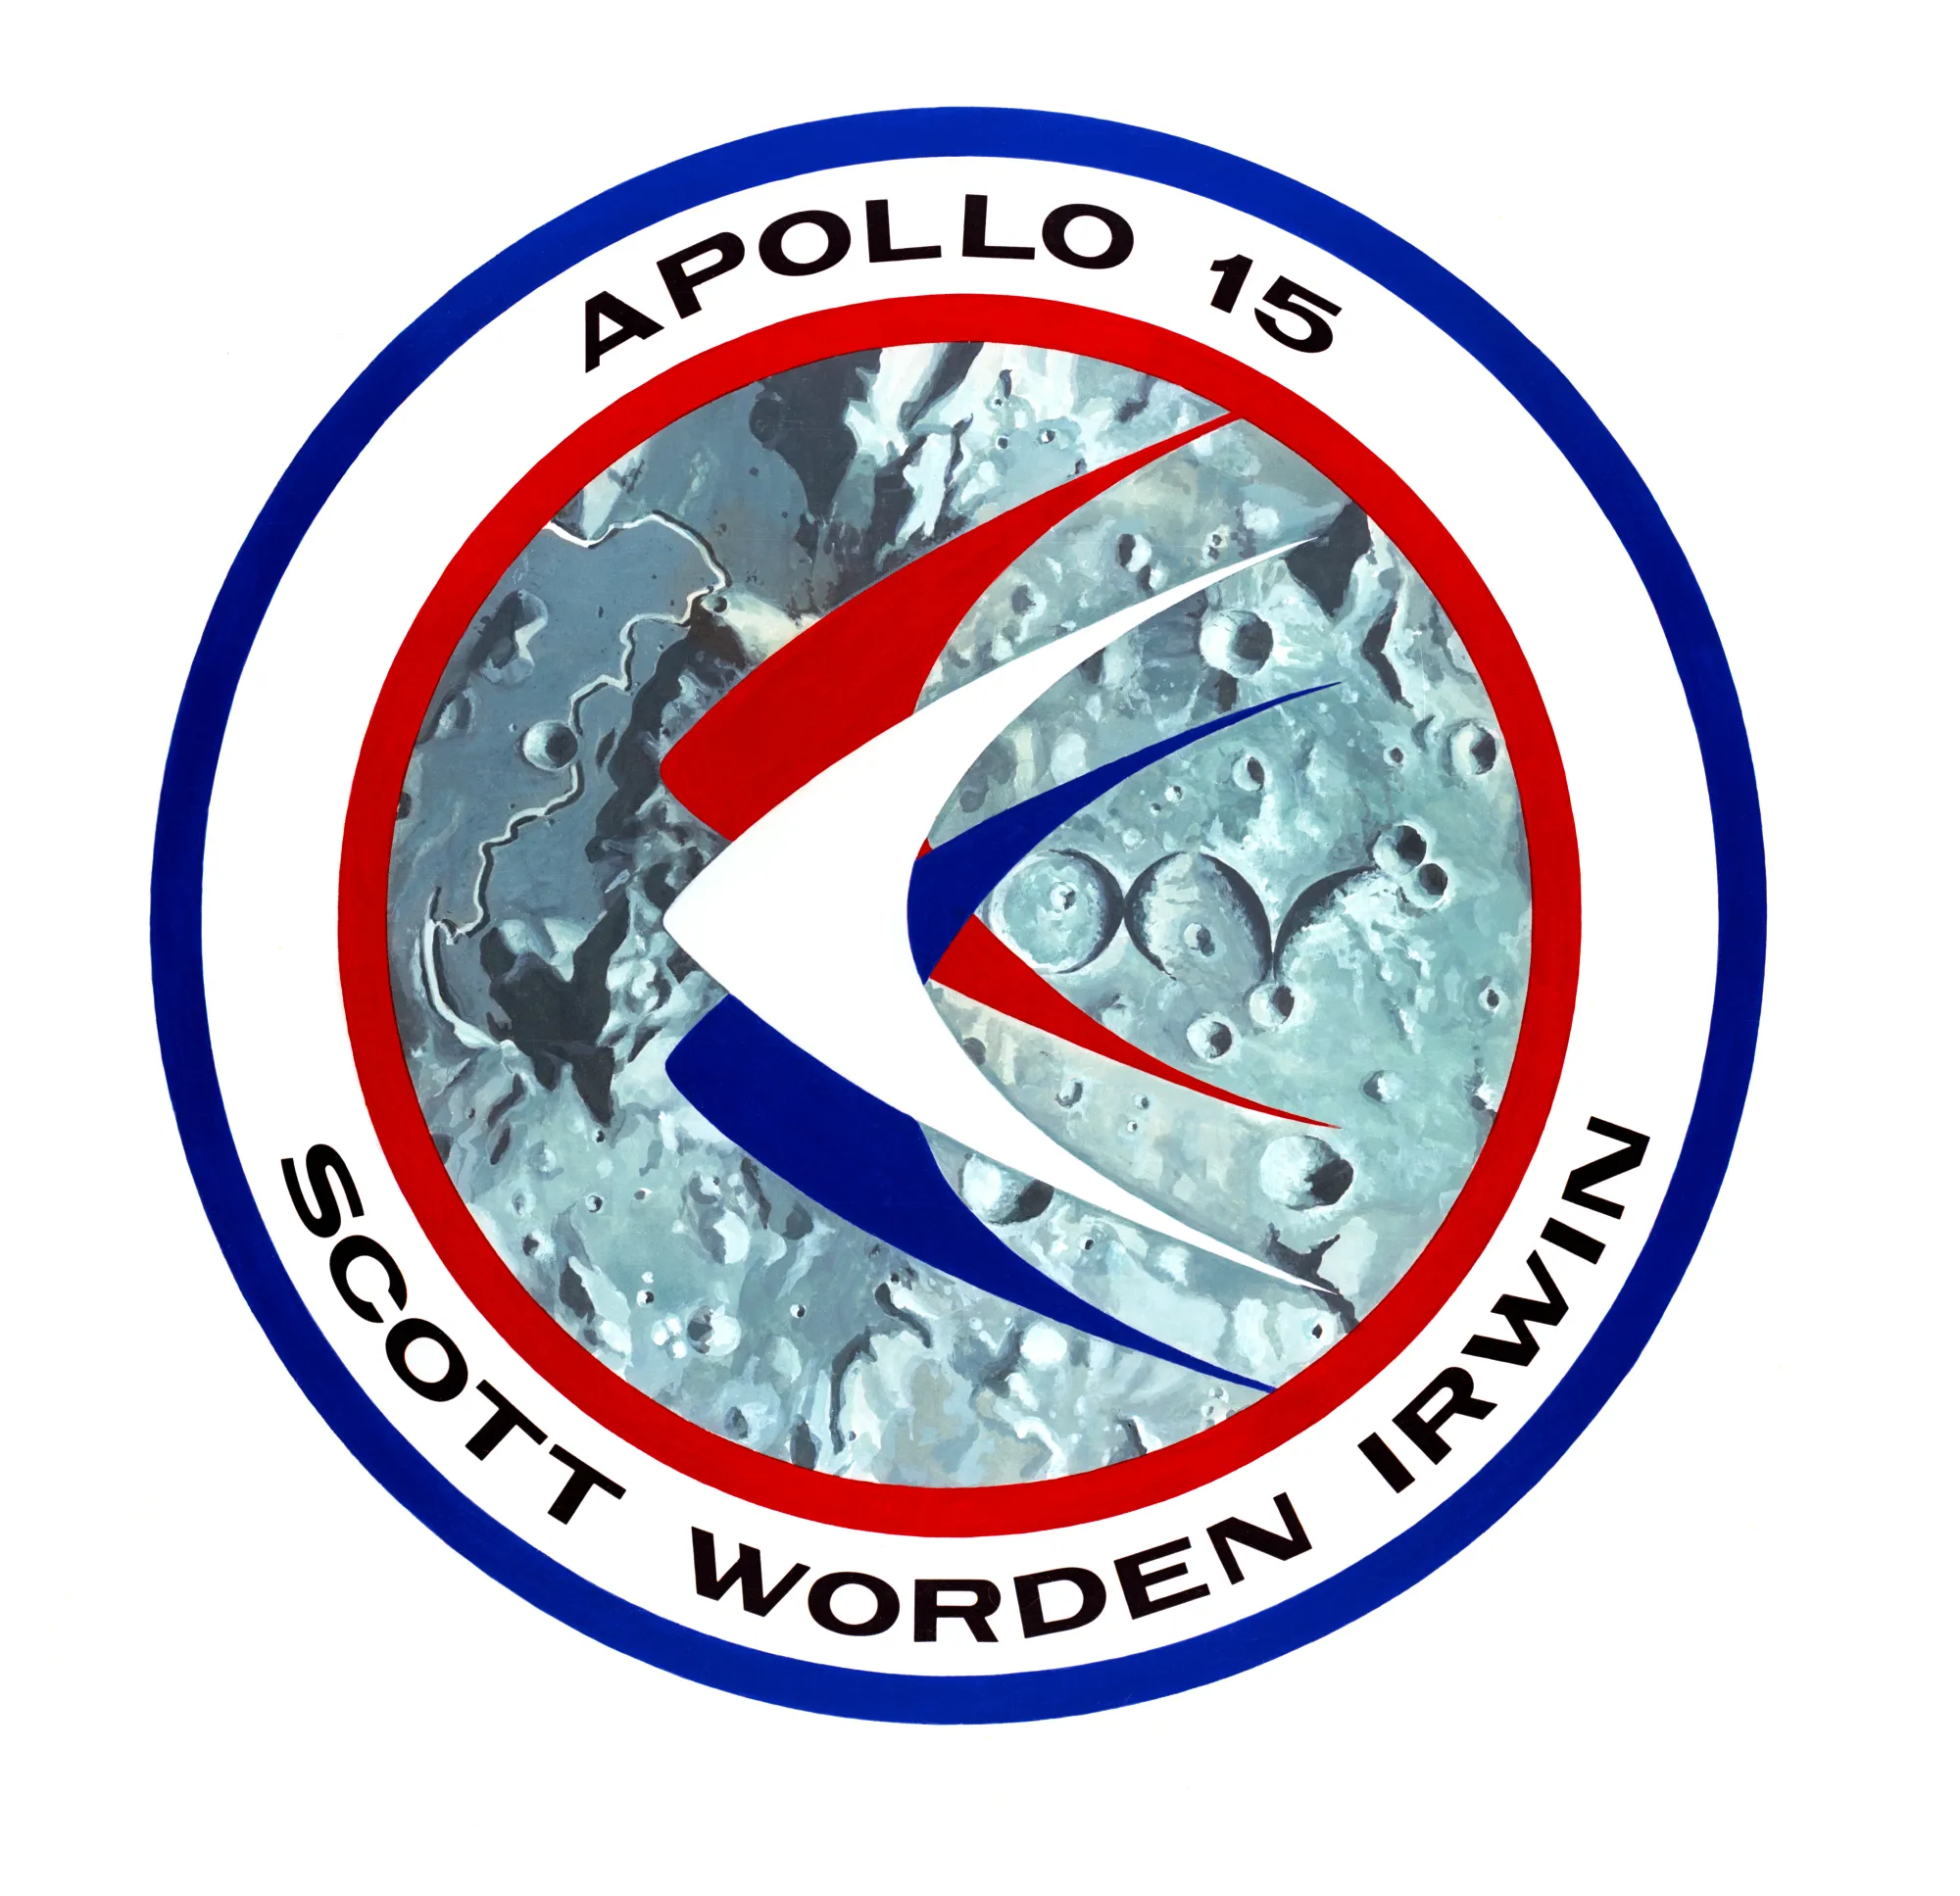 Apollo 15 documentary “Galileo’s Moon” launches 24/7 streaming tomorrow: where to watch